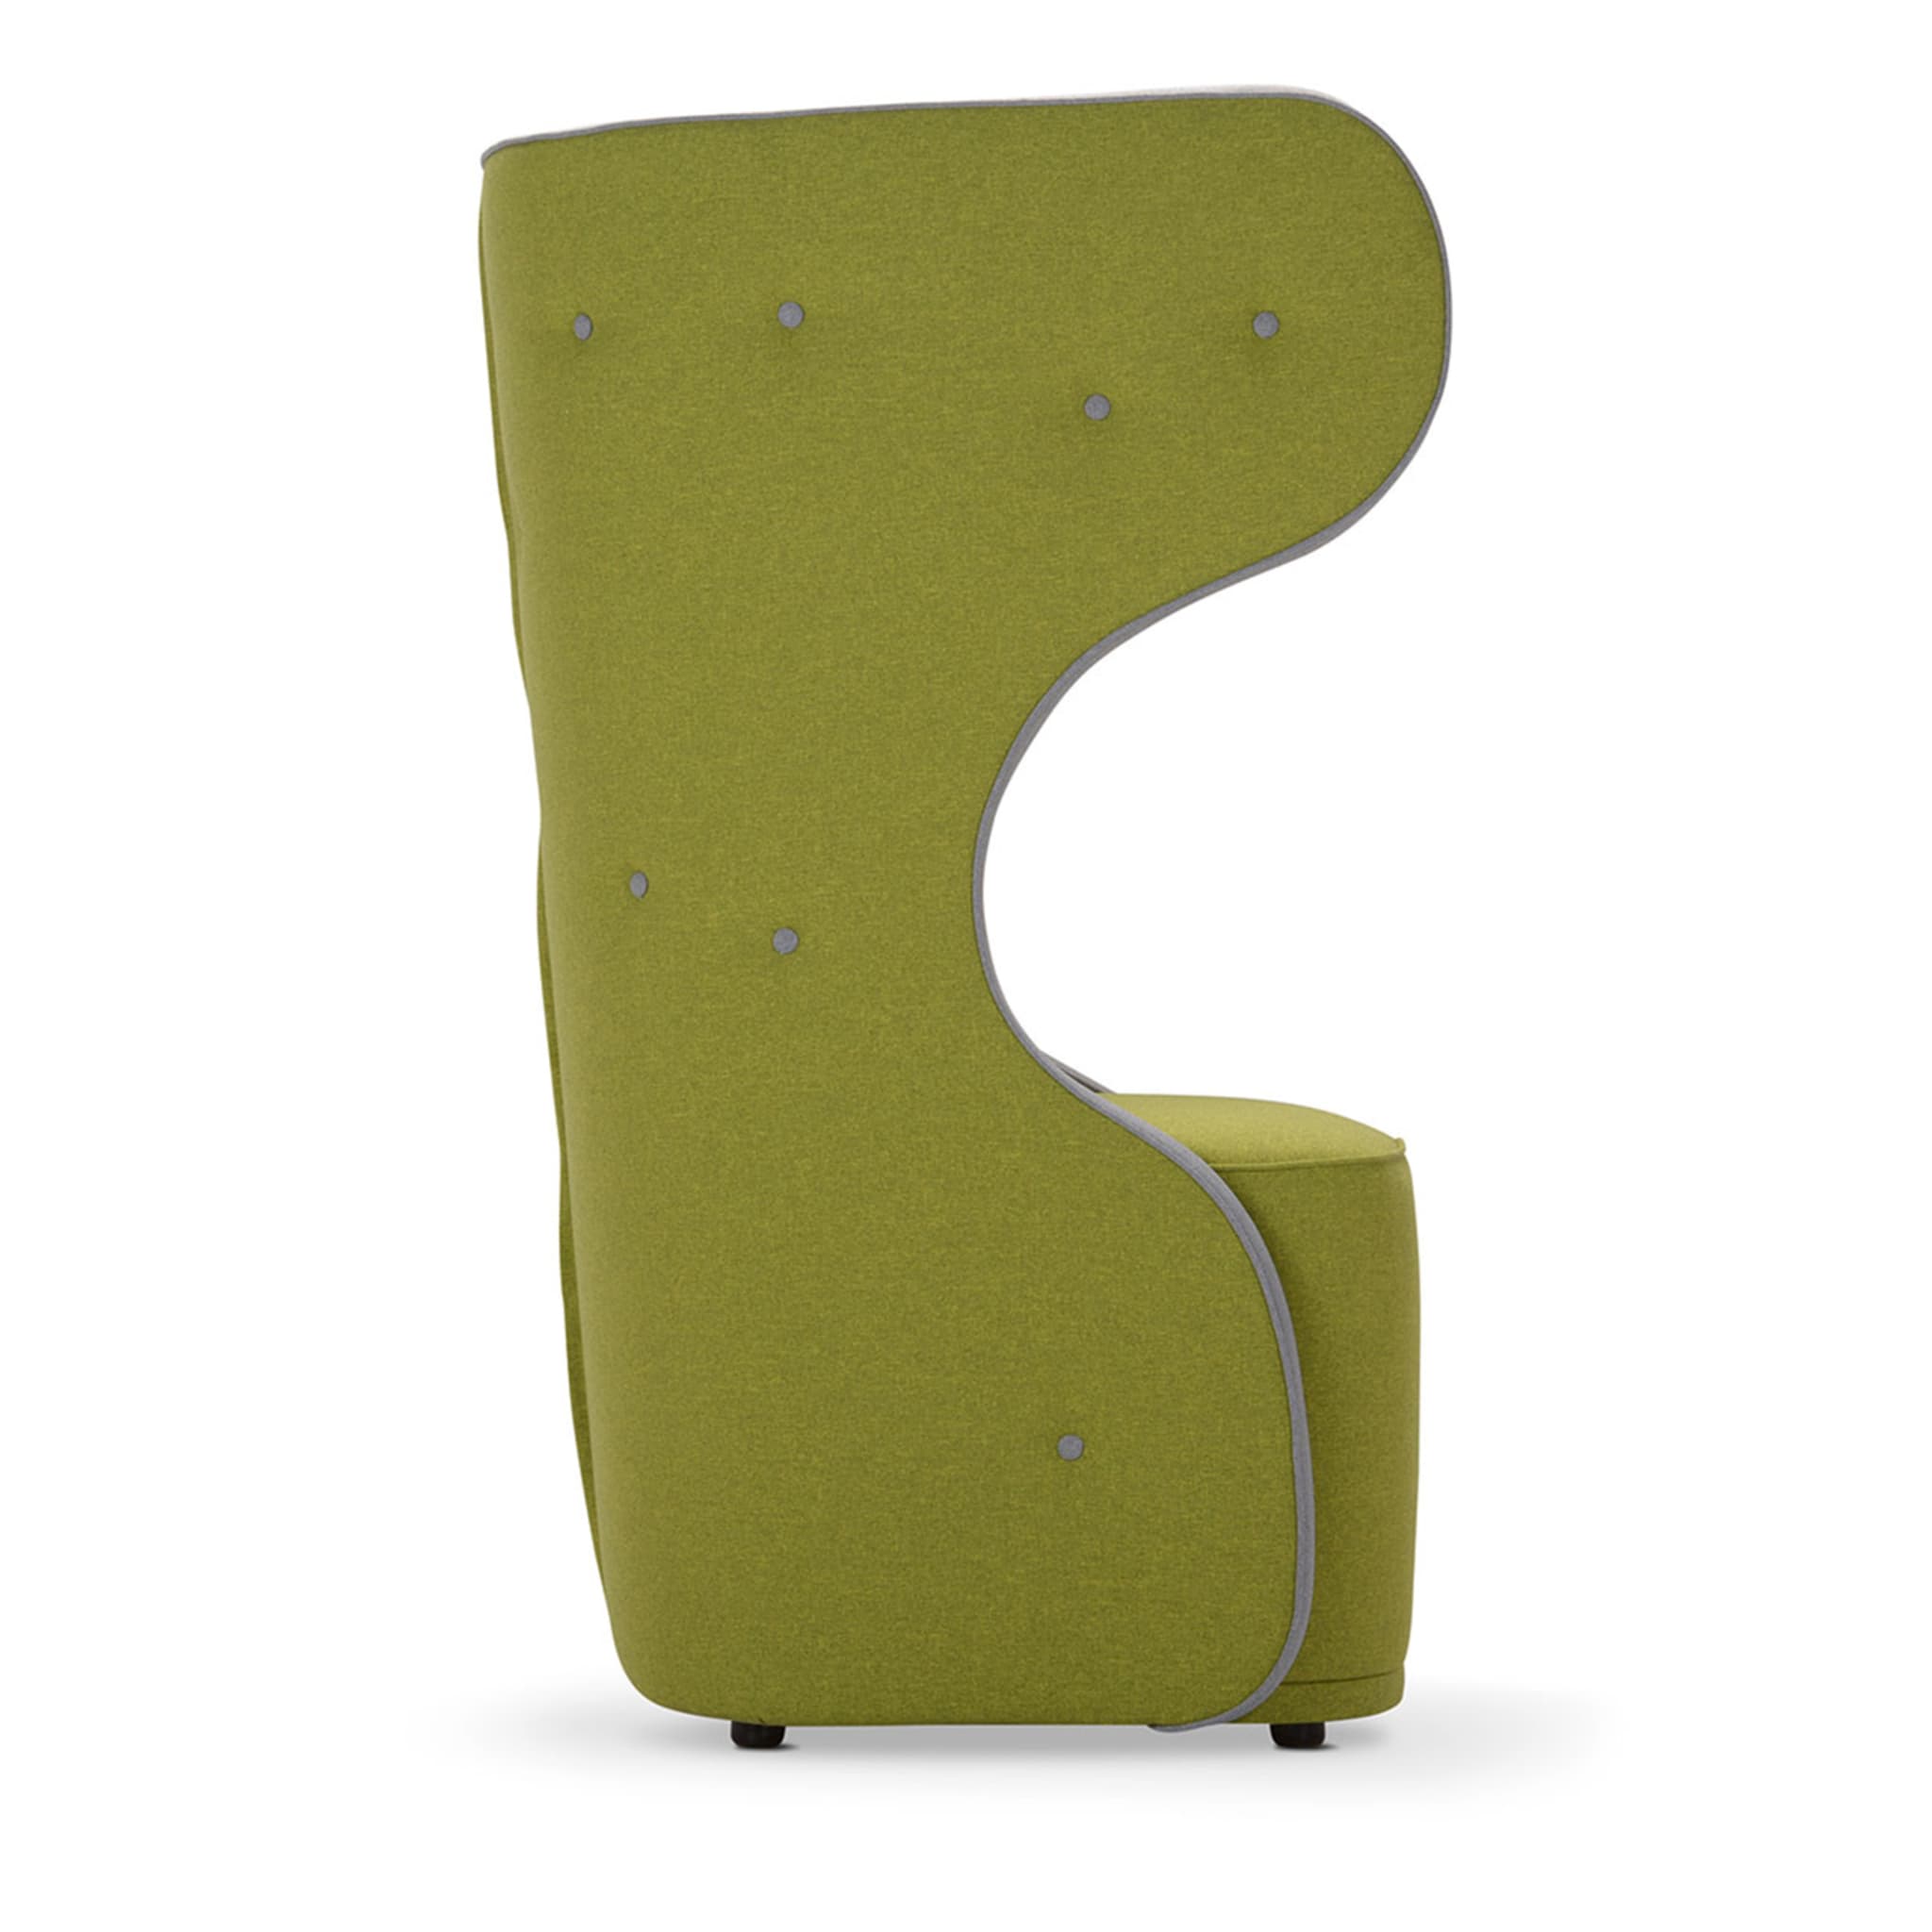 Wow Green & Gray Armchair by Simone Micheli - Alternative view 2